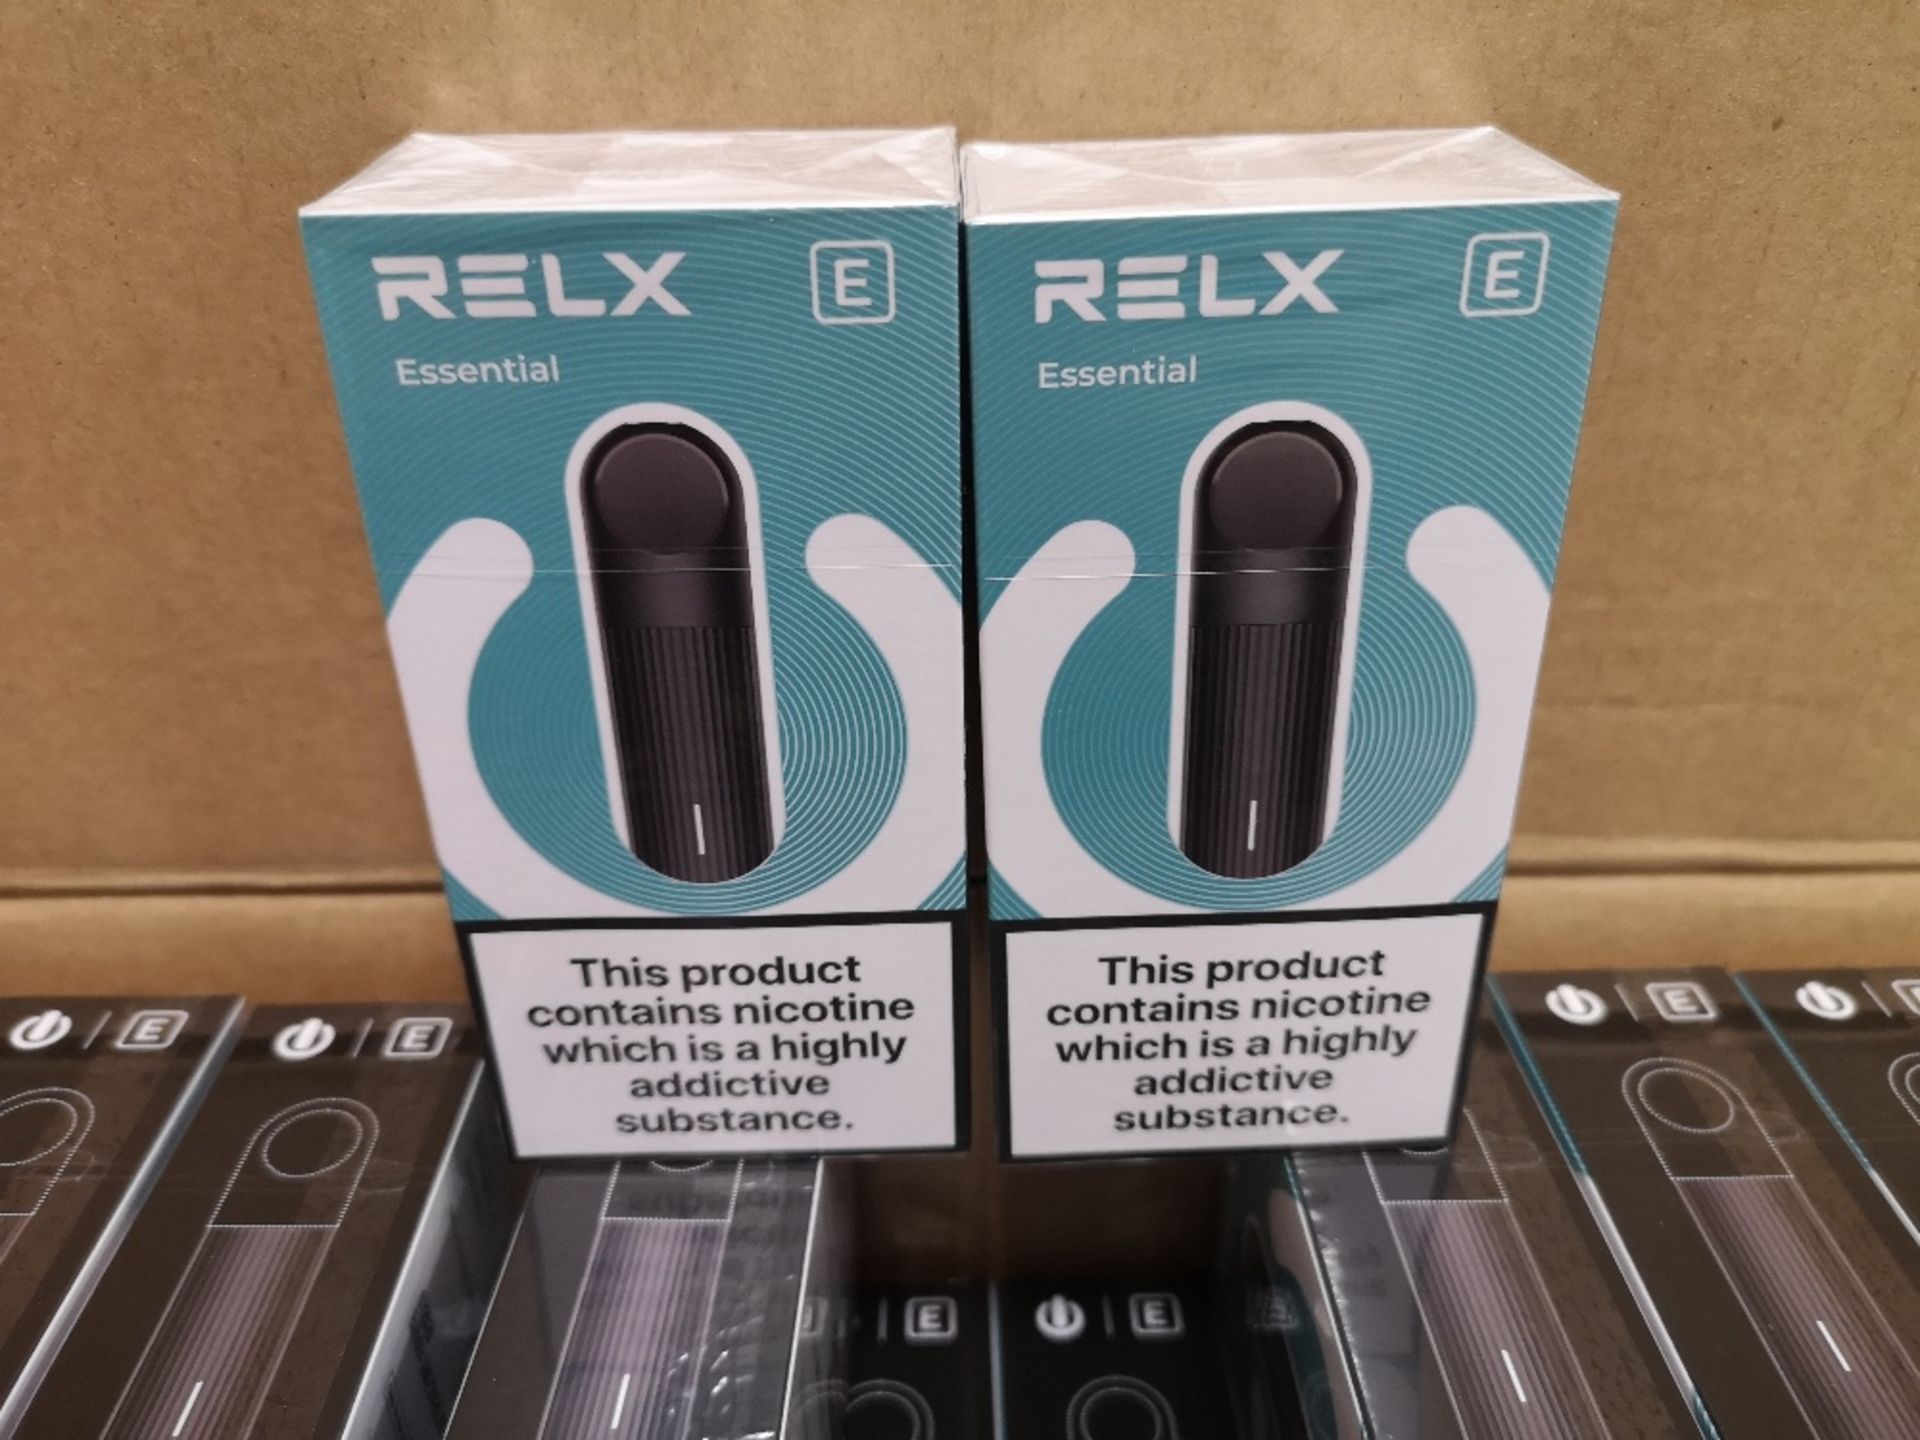 (100) RELX Essential Black Vape Pens - Image 2 of 4